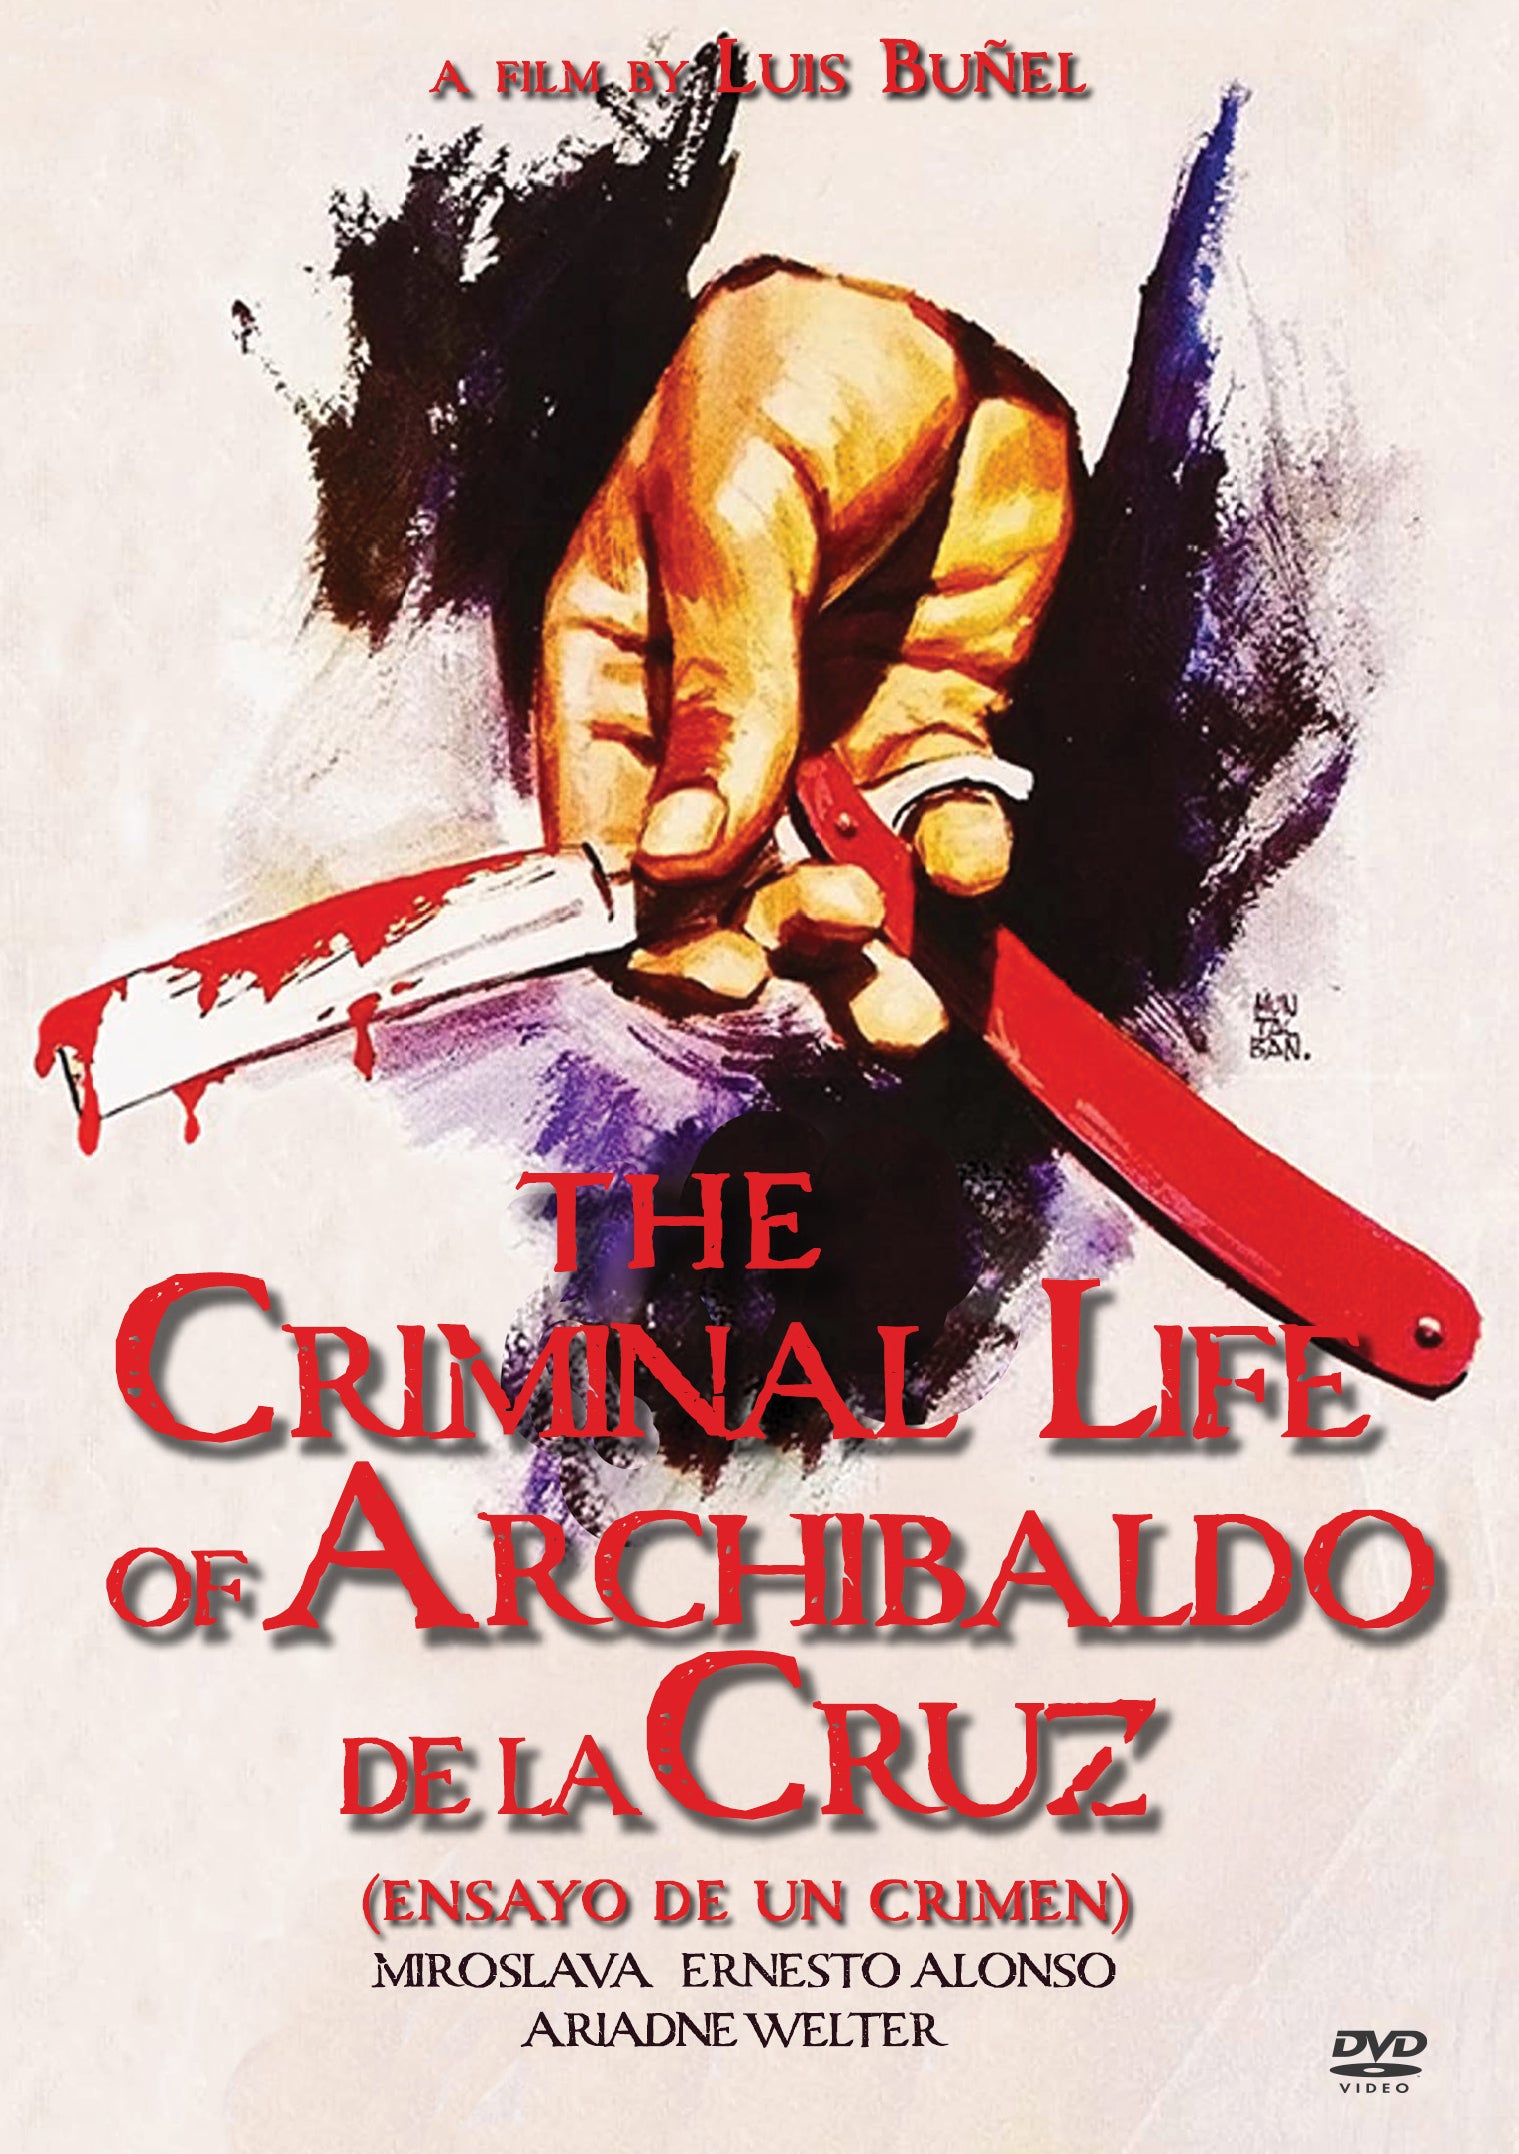 THE CRIMINAL LIFE OF ARCHIBALDO DE LA CRUZ DVD